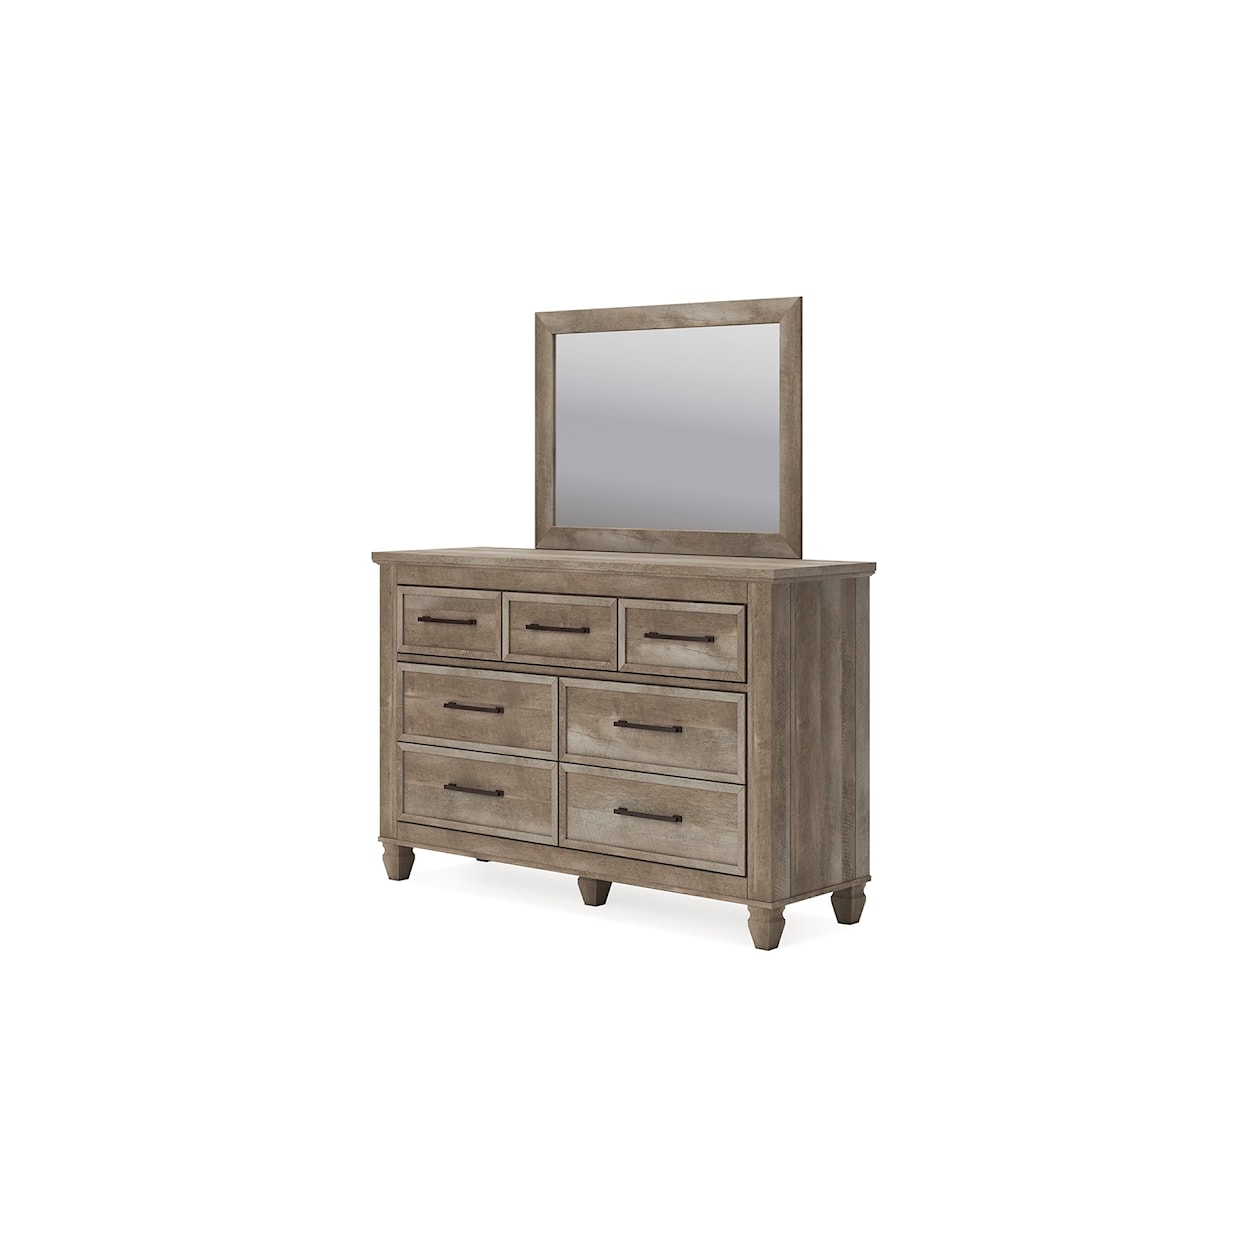 StyleLine Yarbeck Dresser and Mirror